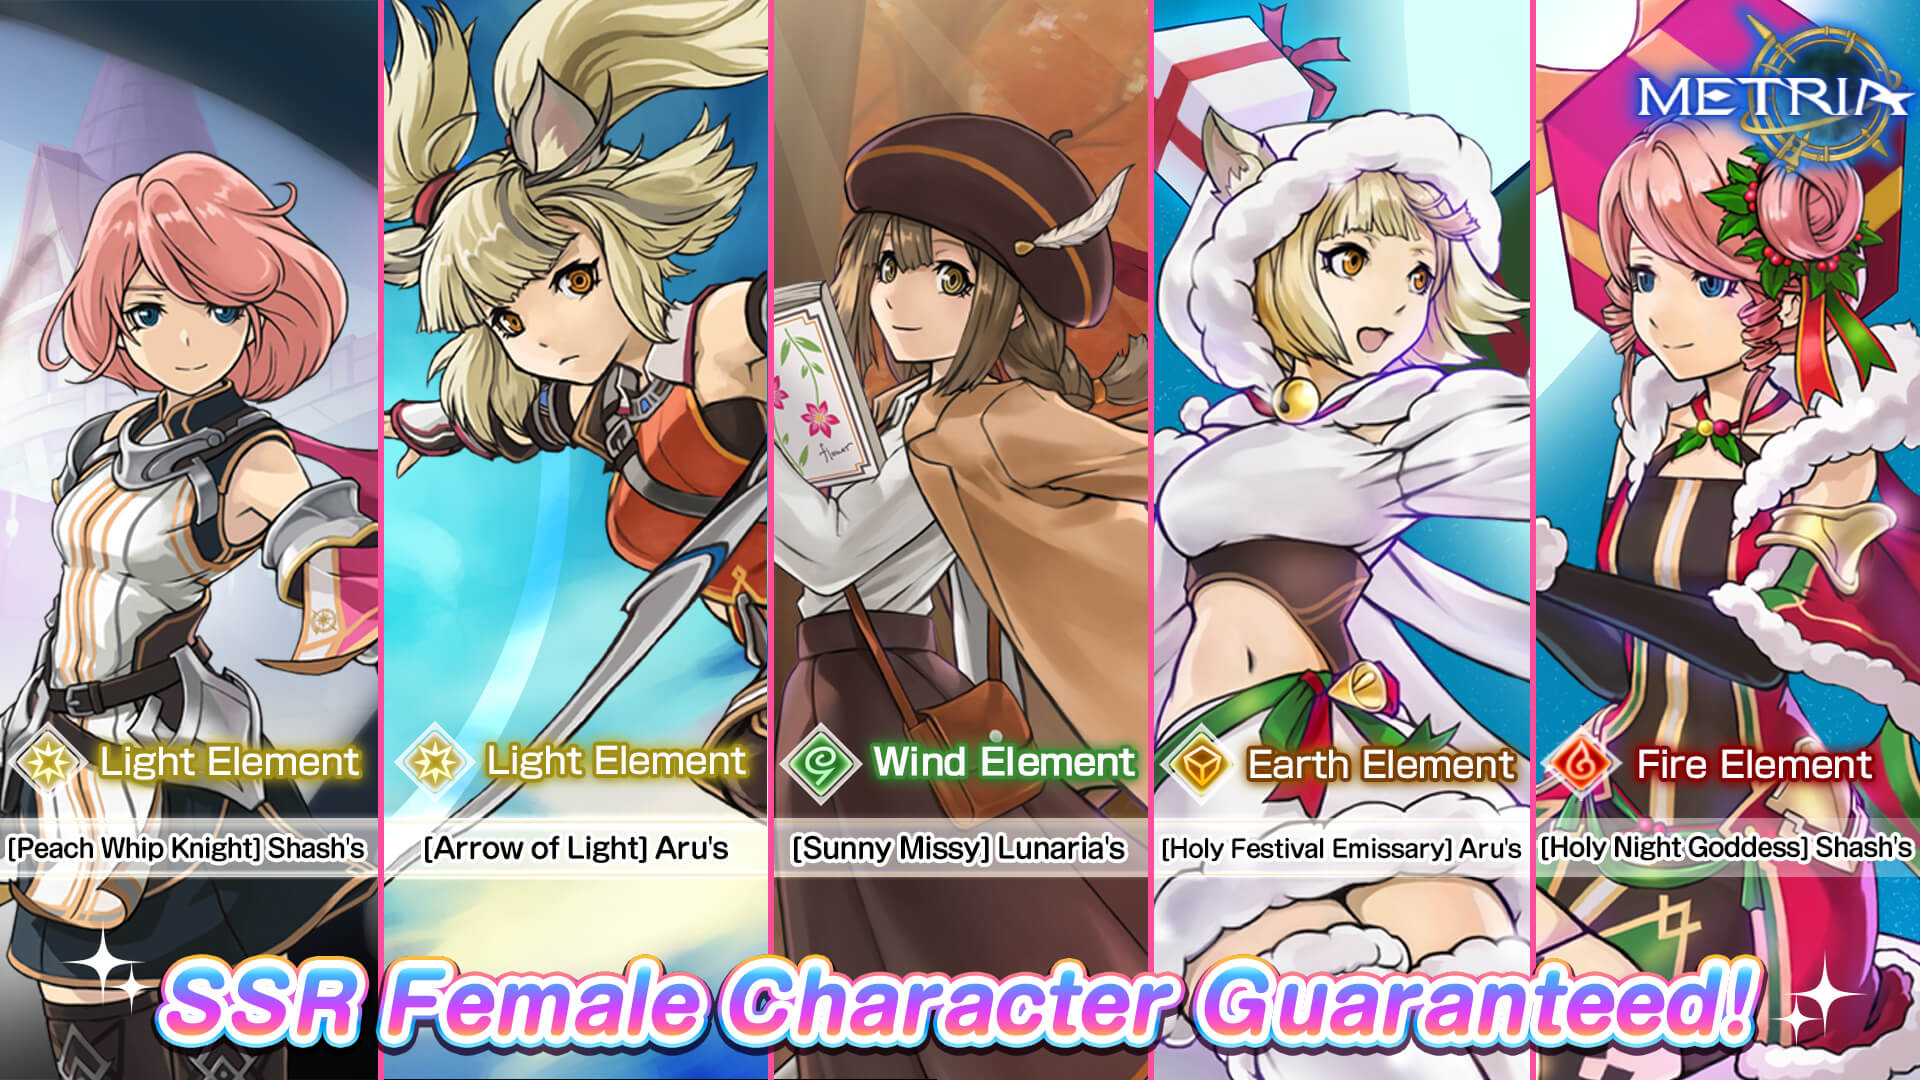 SSR Female Character Guaranteed! Guaranteed SSR Character Gacha "Valentine's Day" Gacha Available!